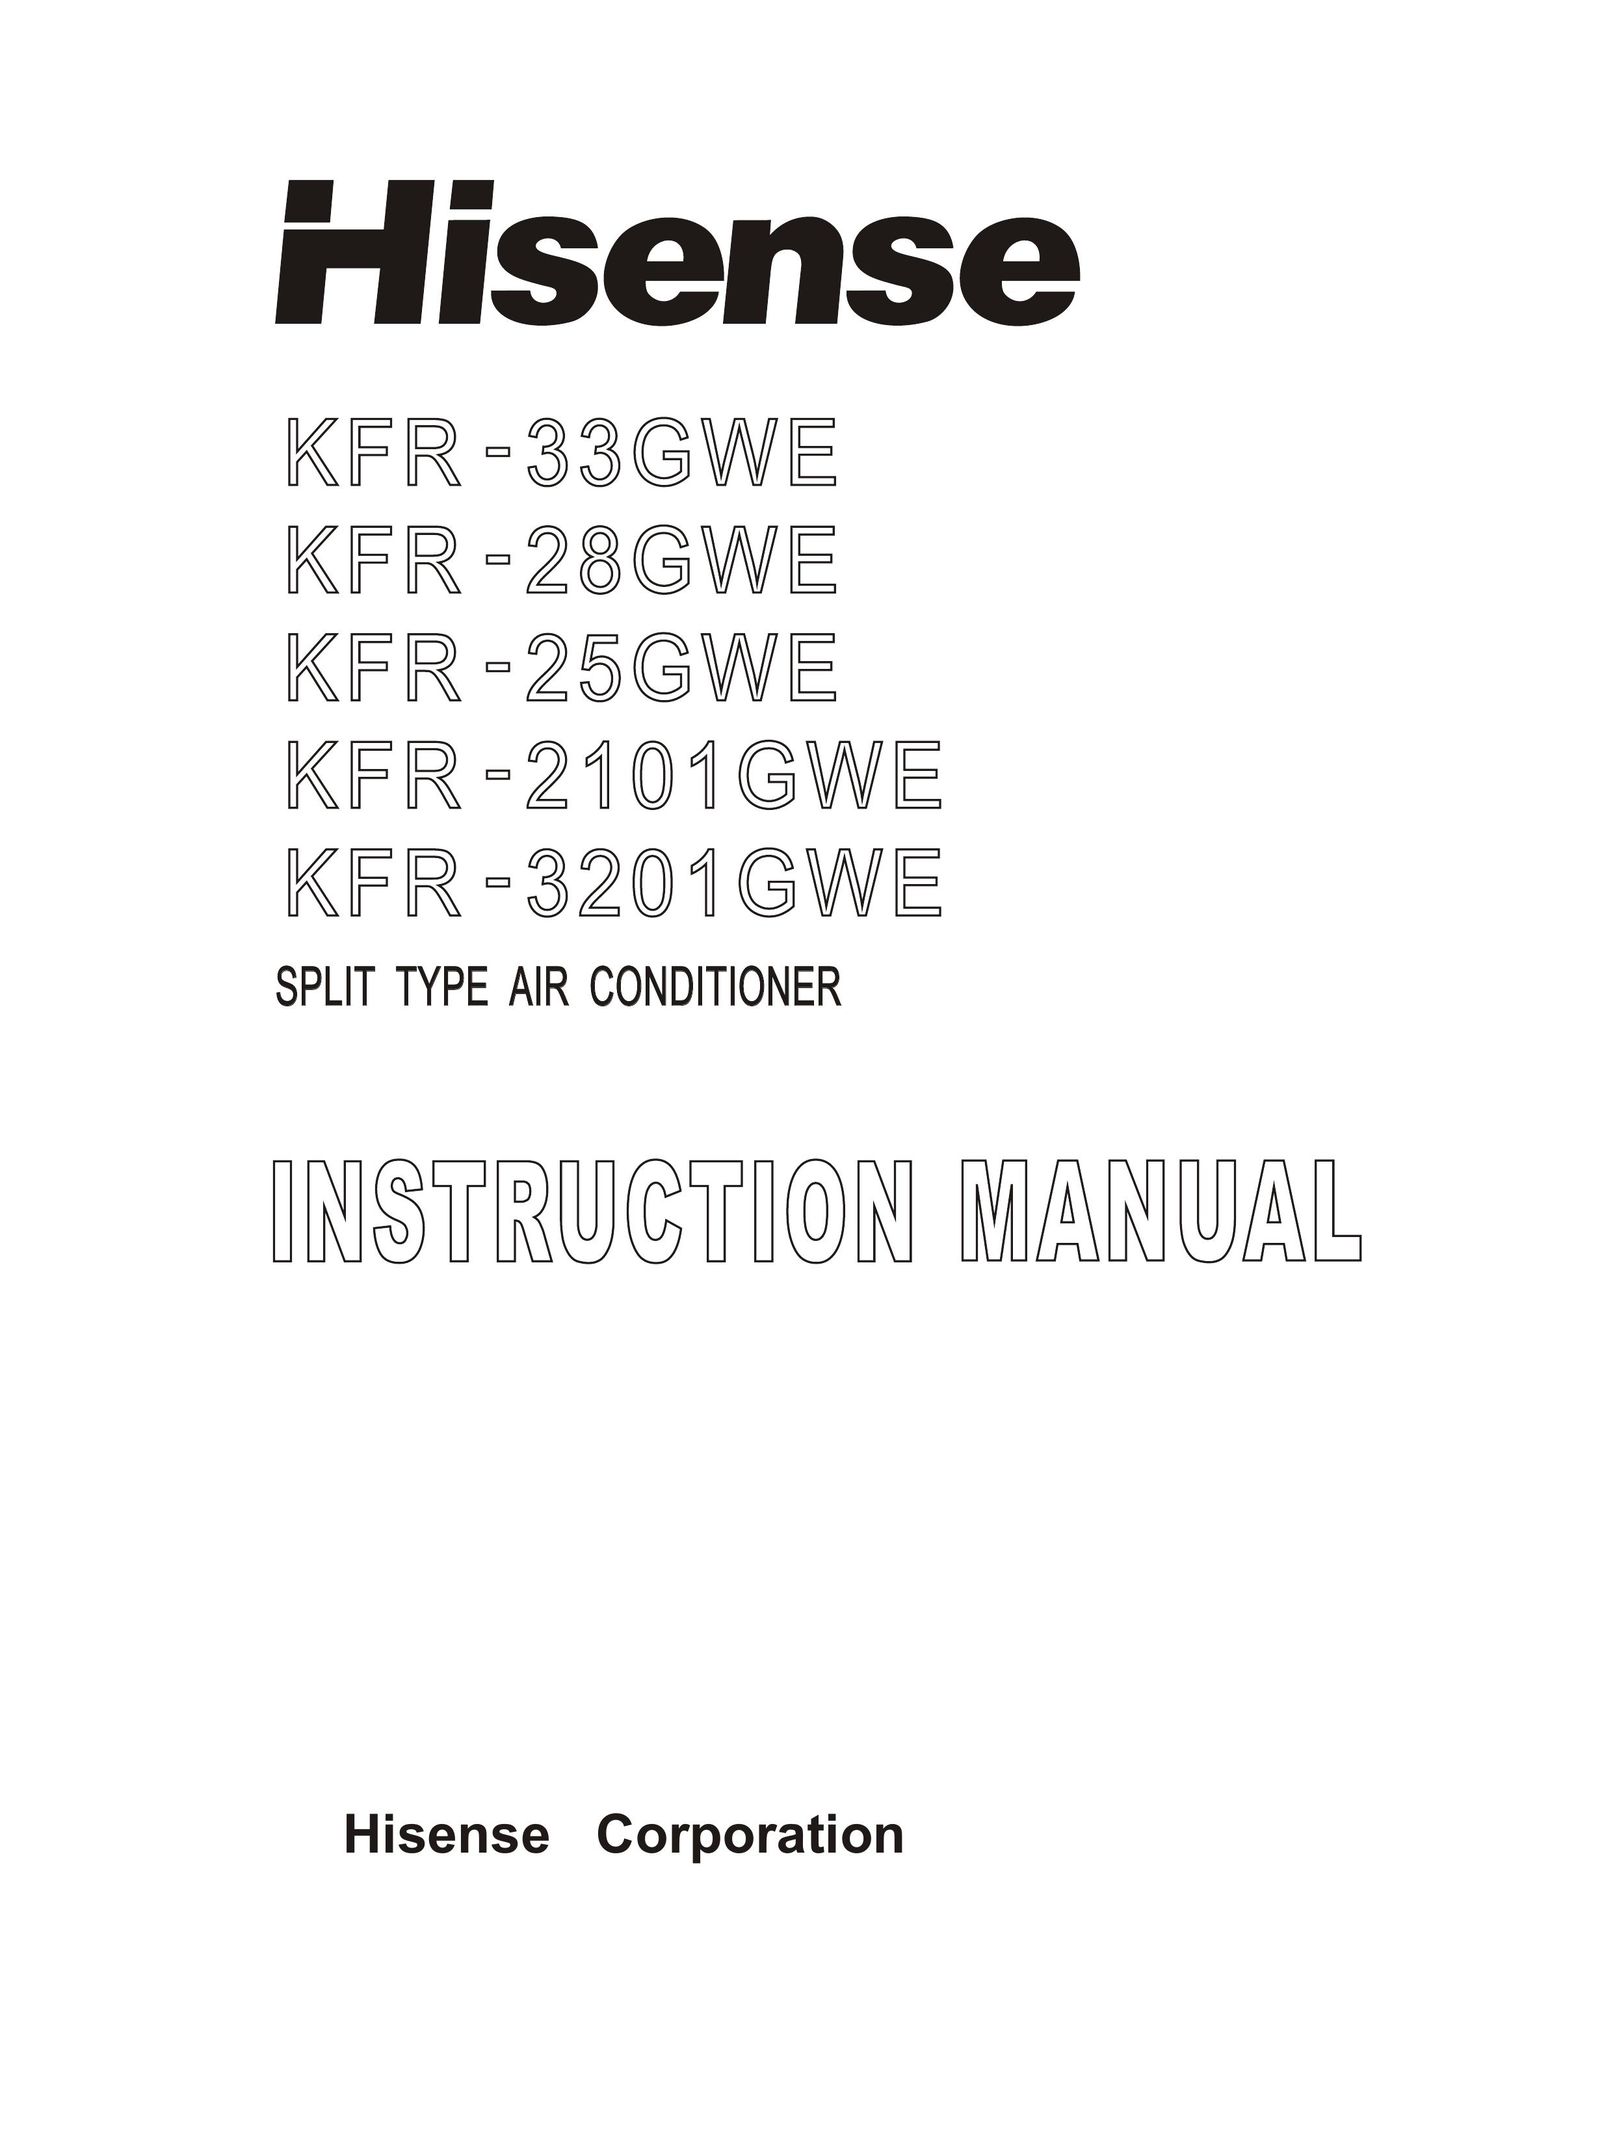 Hisense Group KFR 3201GWE Air Conditioner User Manual